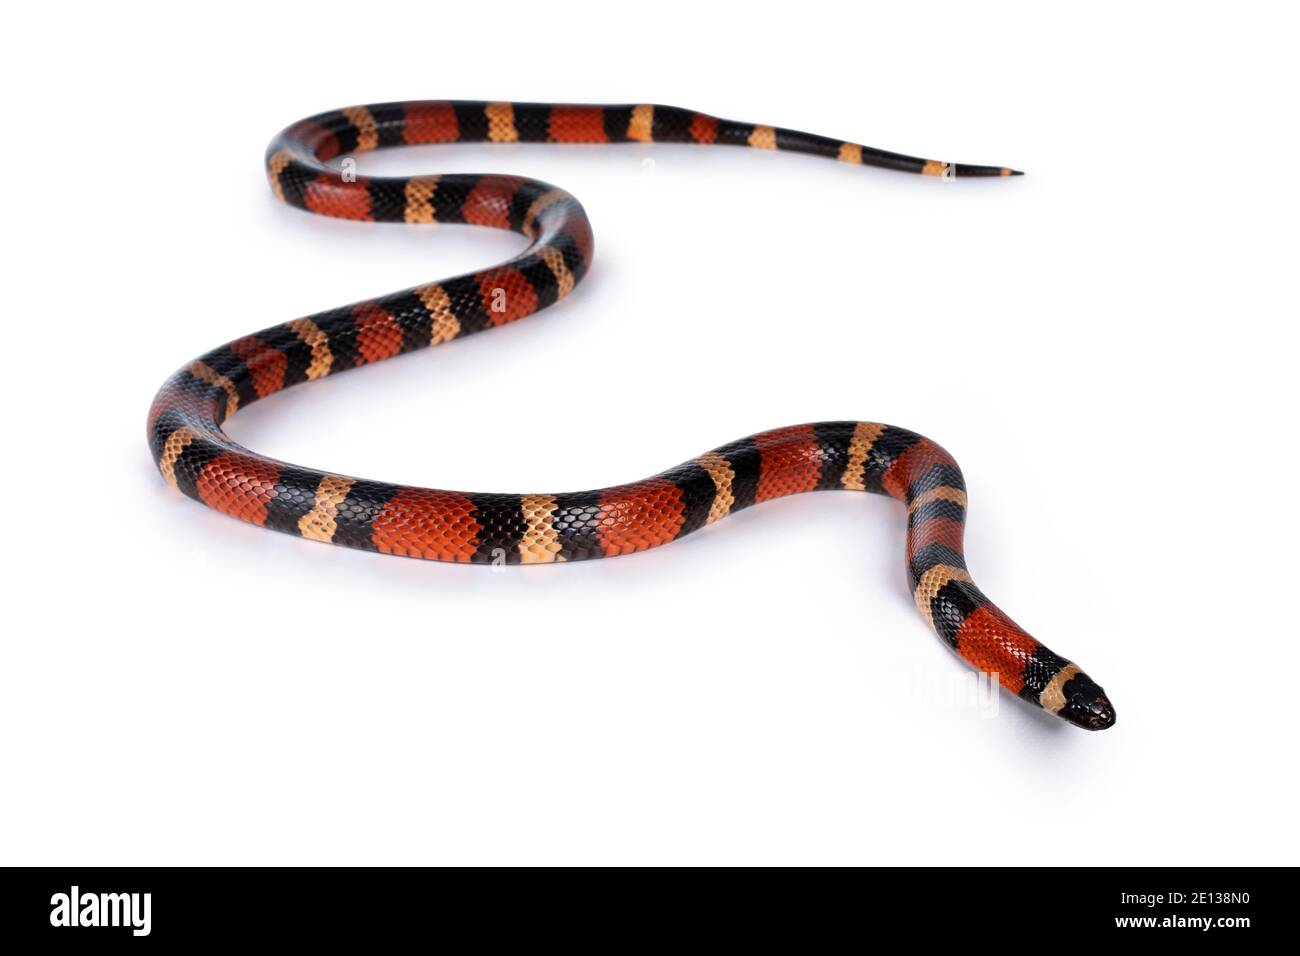 Adult female Pueblan milk snake aka Lampropeltis triangulum campbelli snake, isolated on a white background. Stock Photo